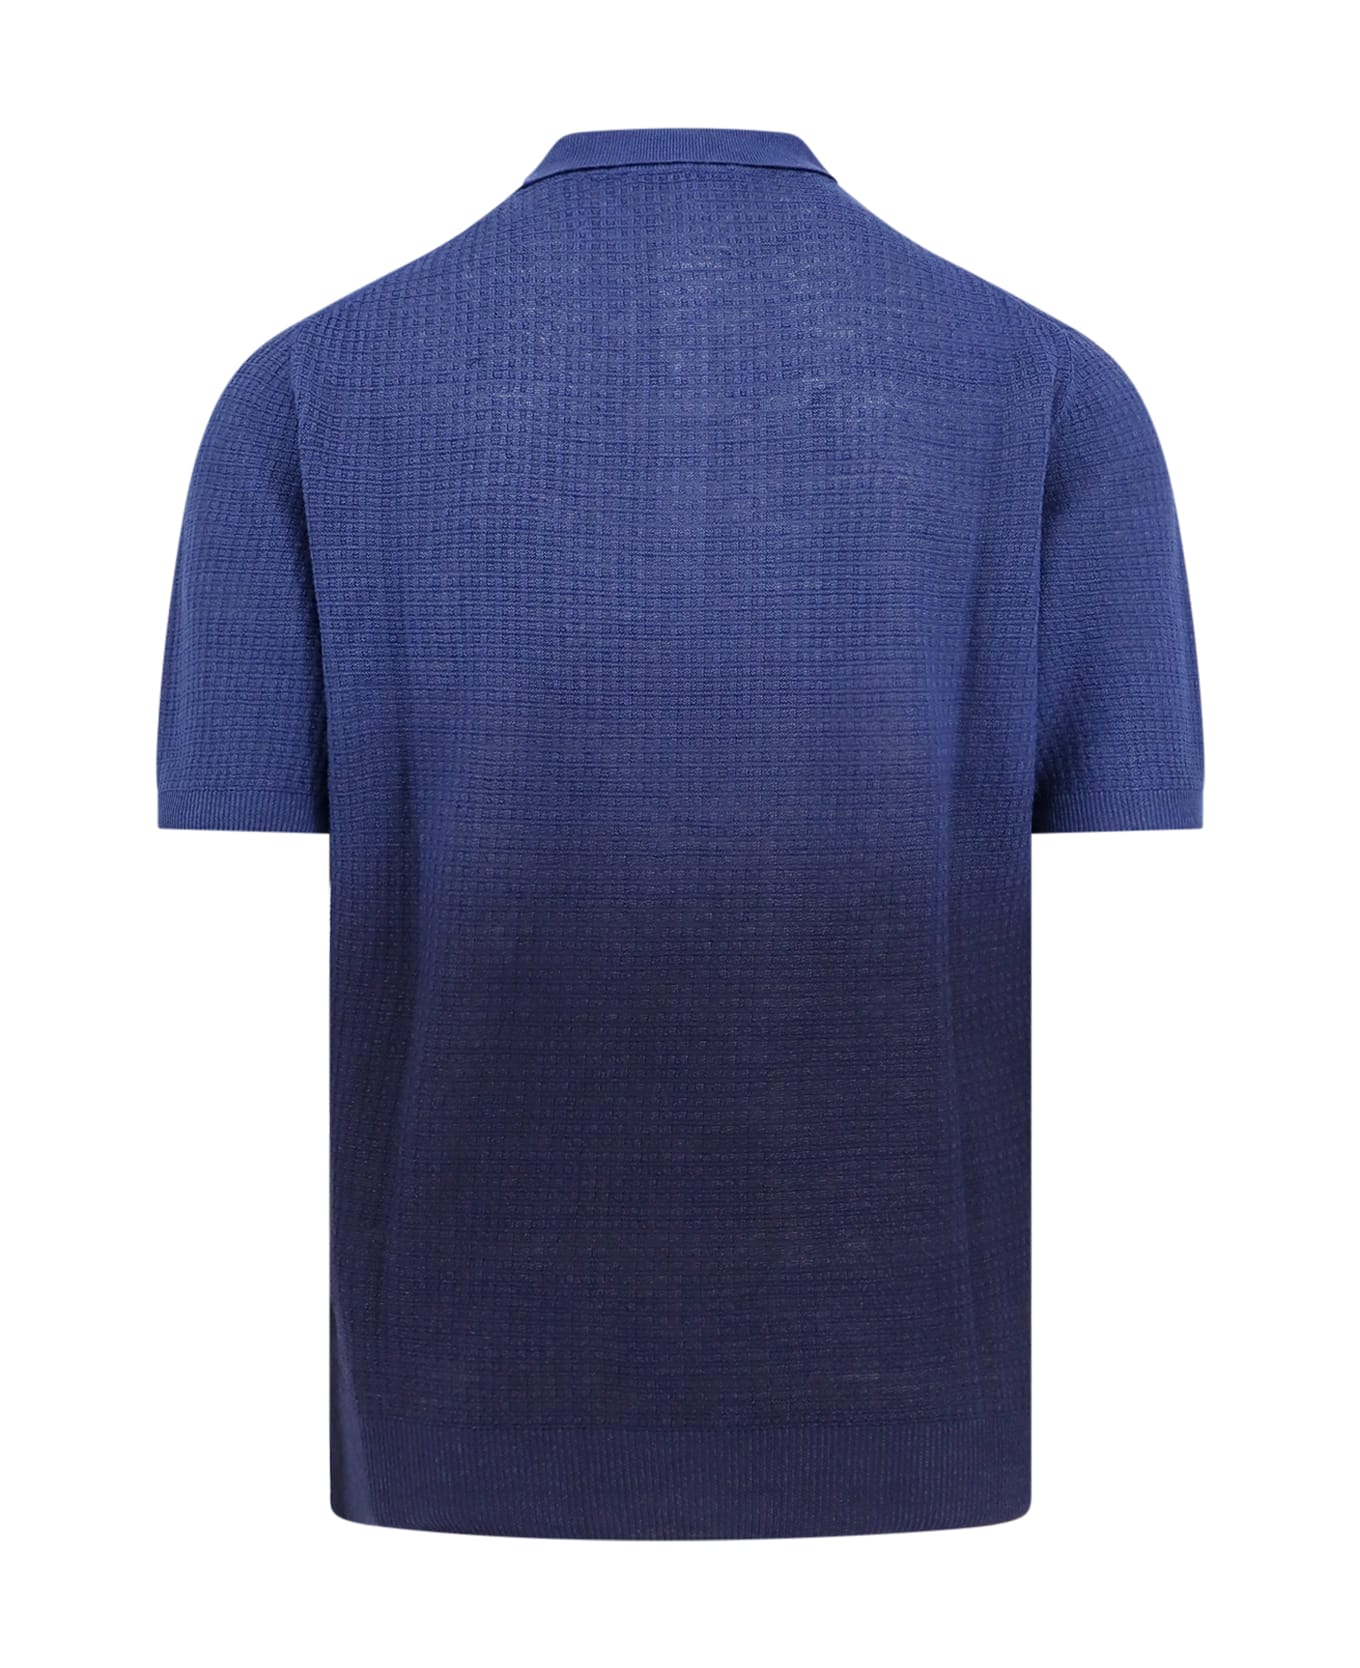 Corneliani Polo Shirt - Blue ポロシャツ